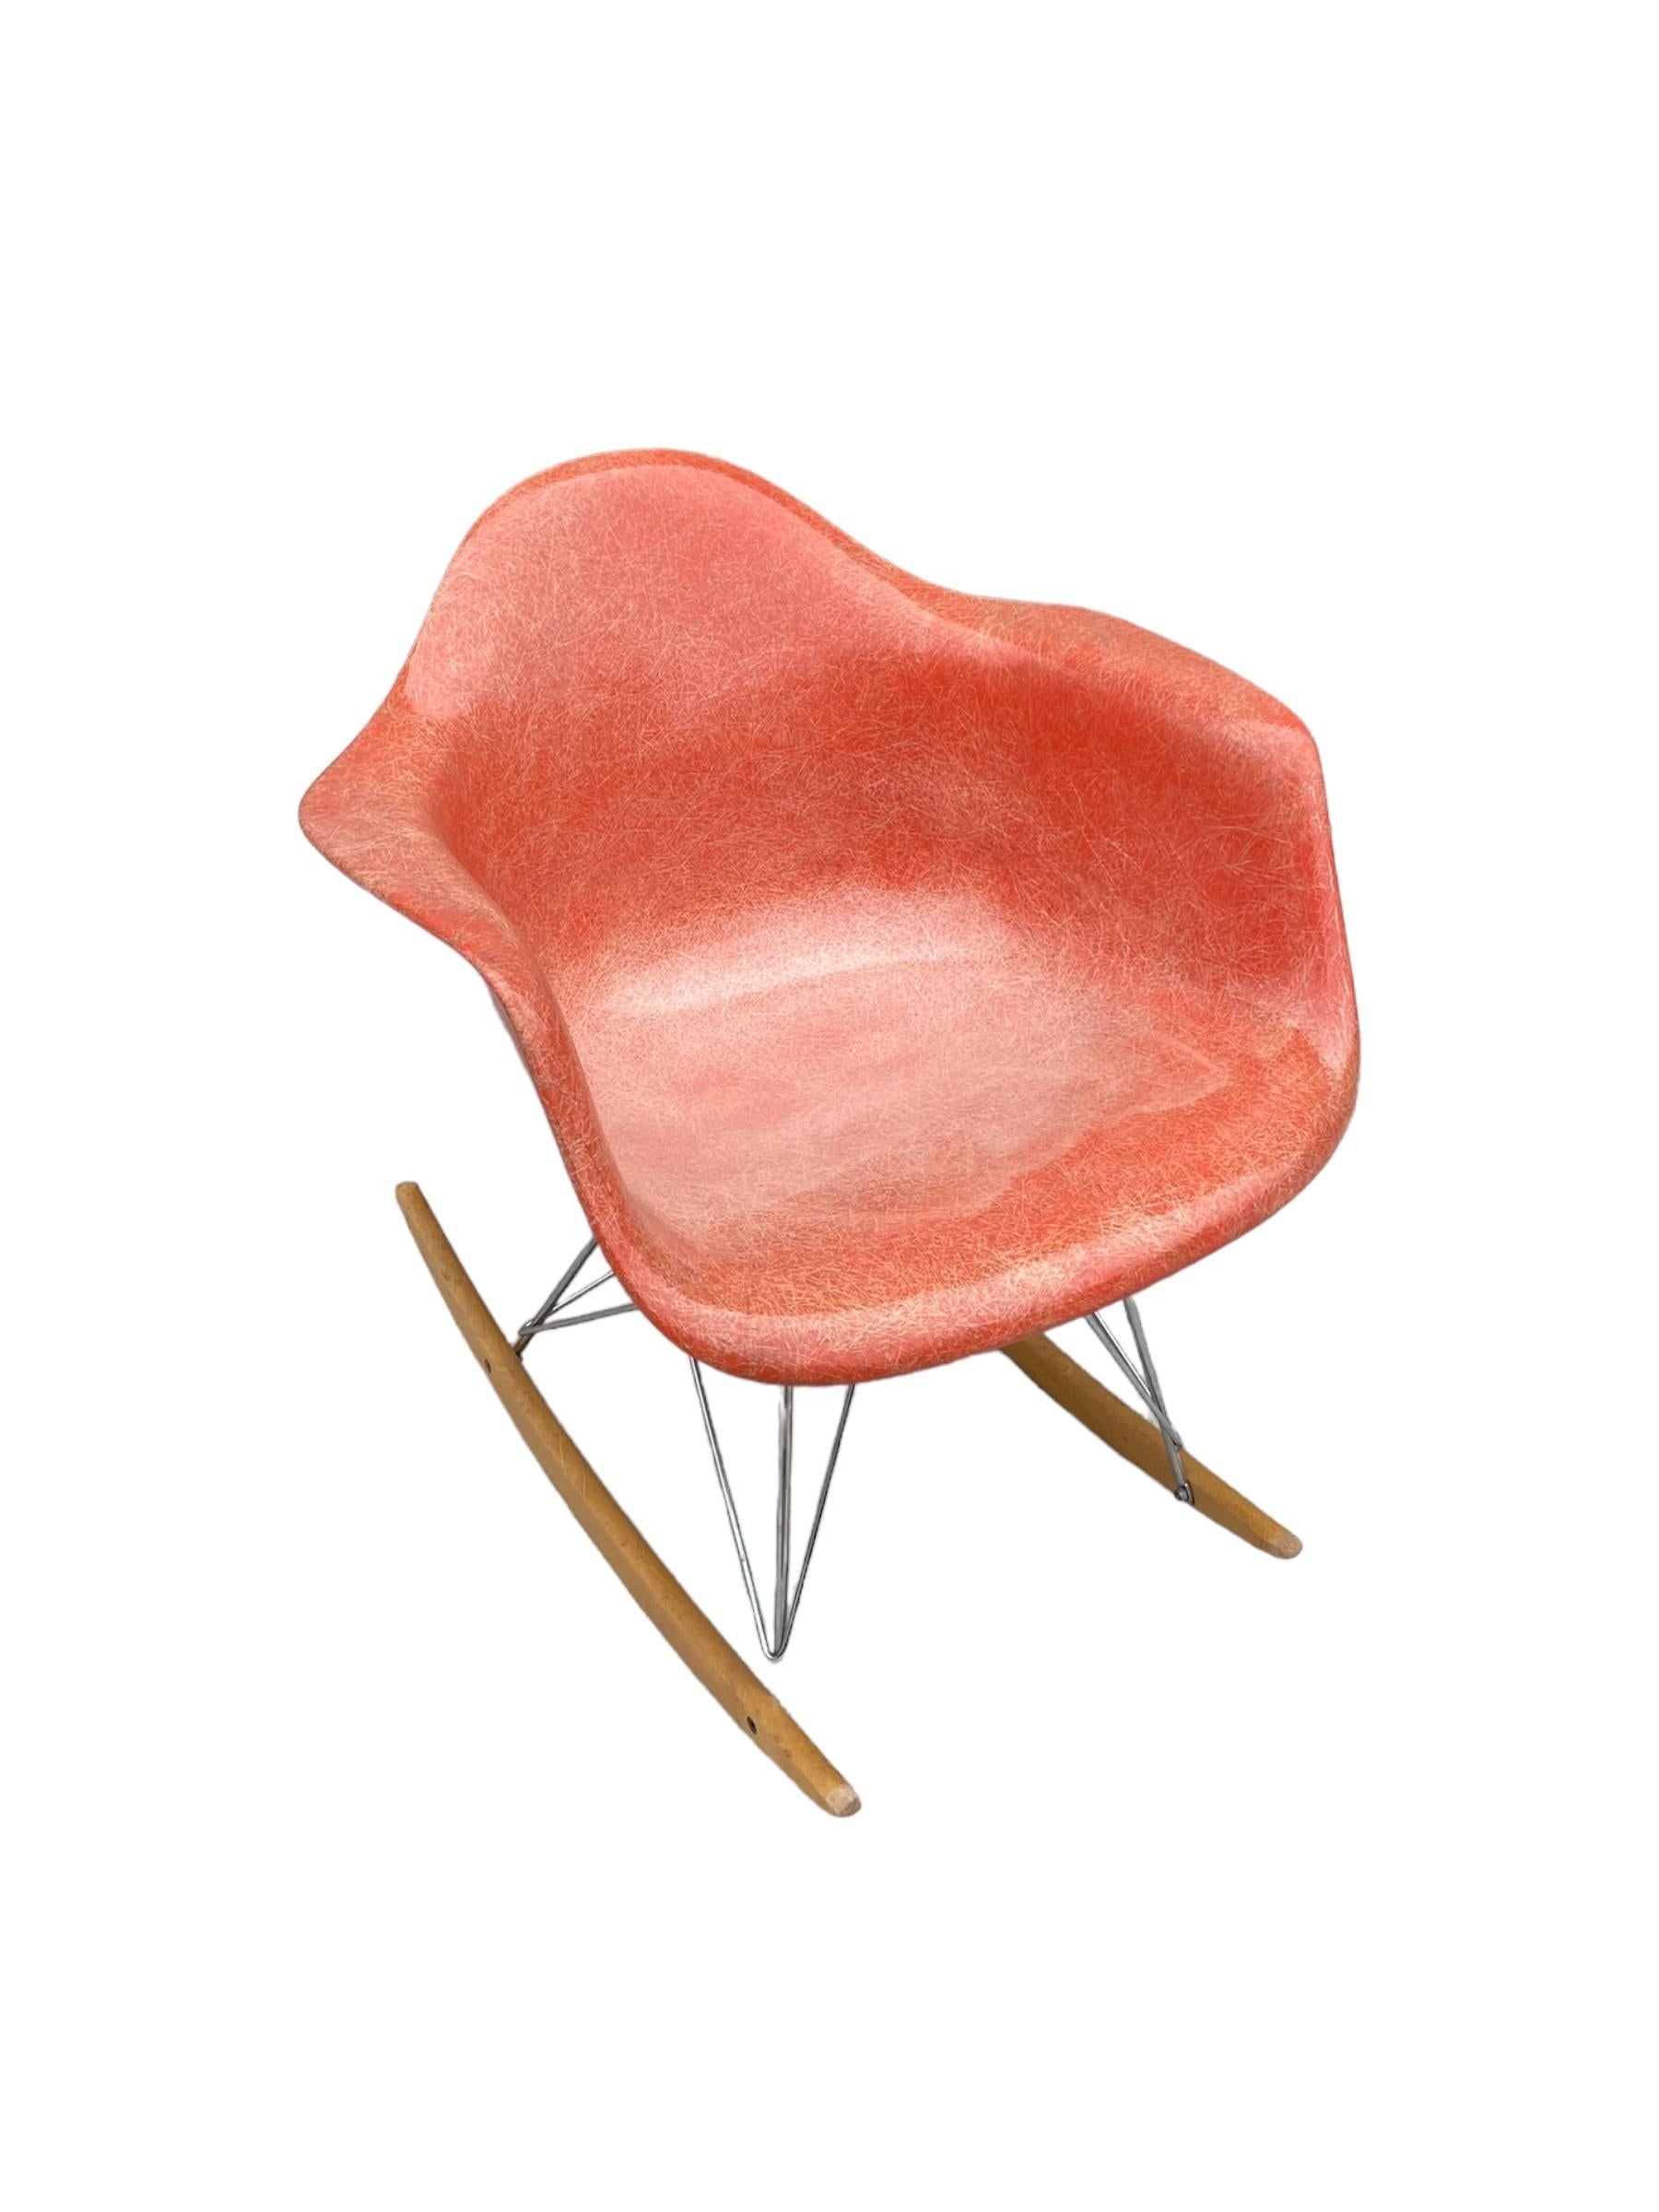 Steel Herman Miller Eames RAR Rocking Chair in Red Orange For Sale